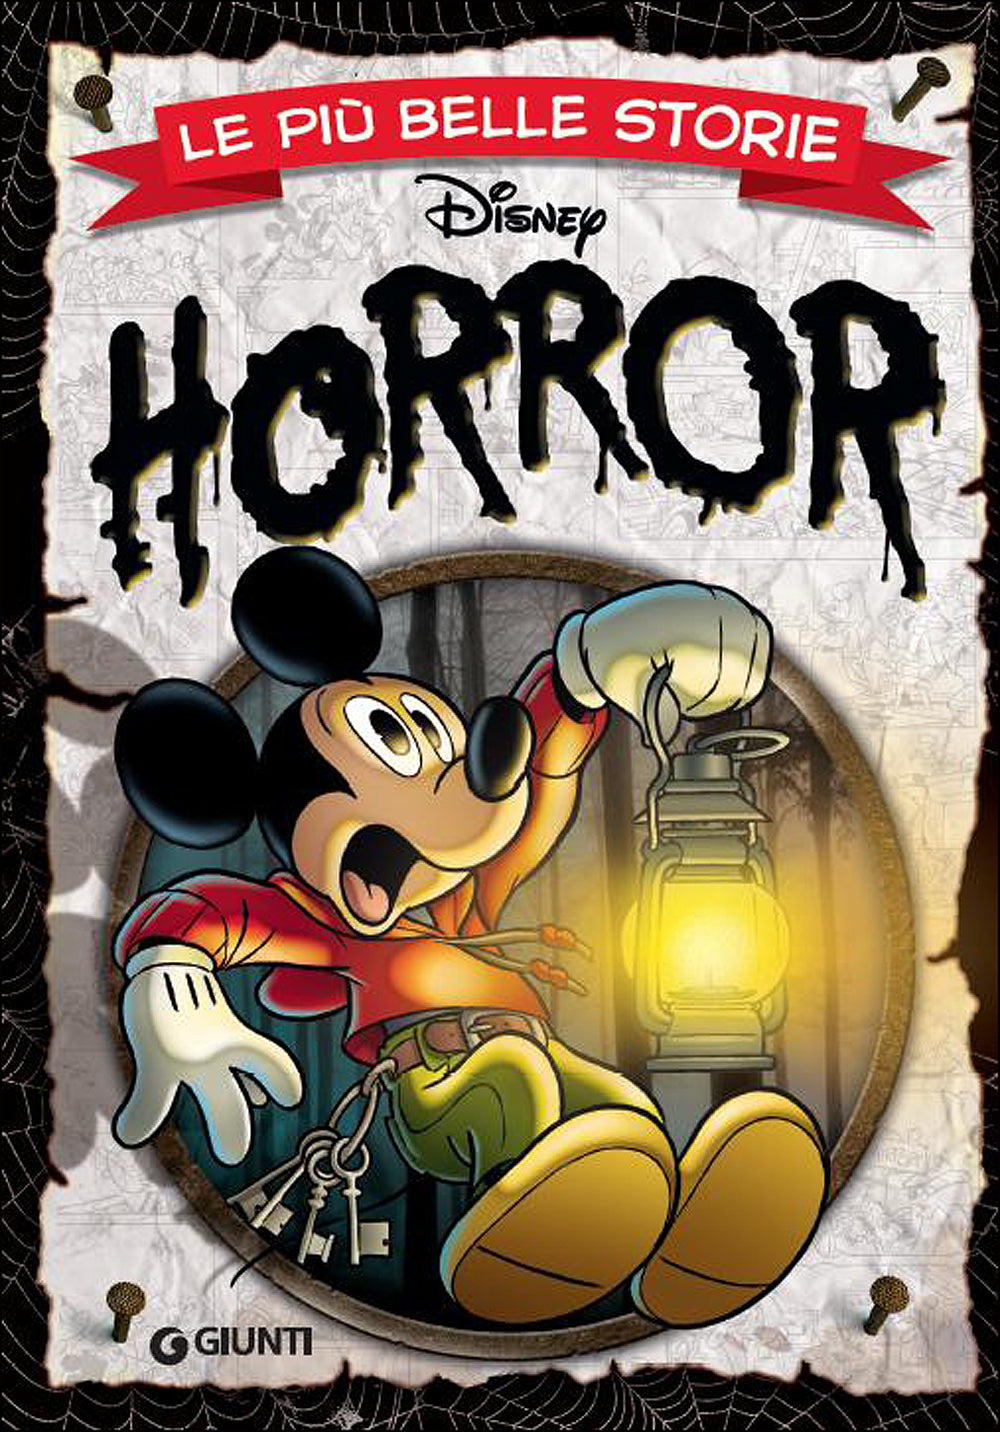 Le più belle storie Horror: libro di Walt Disney